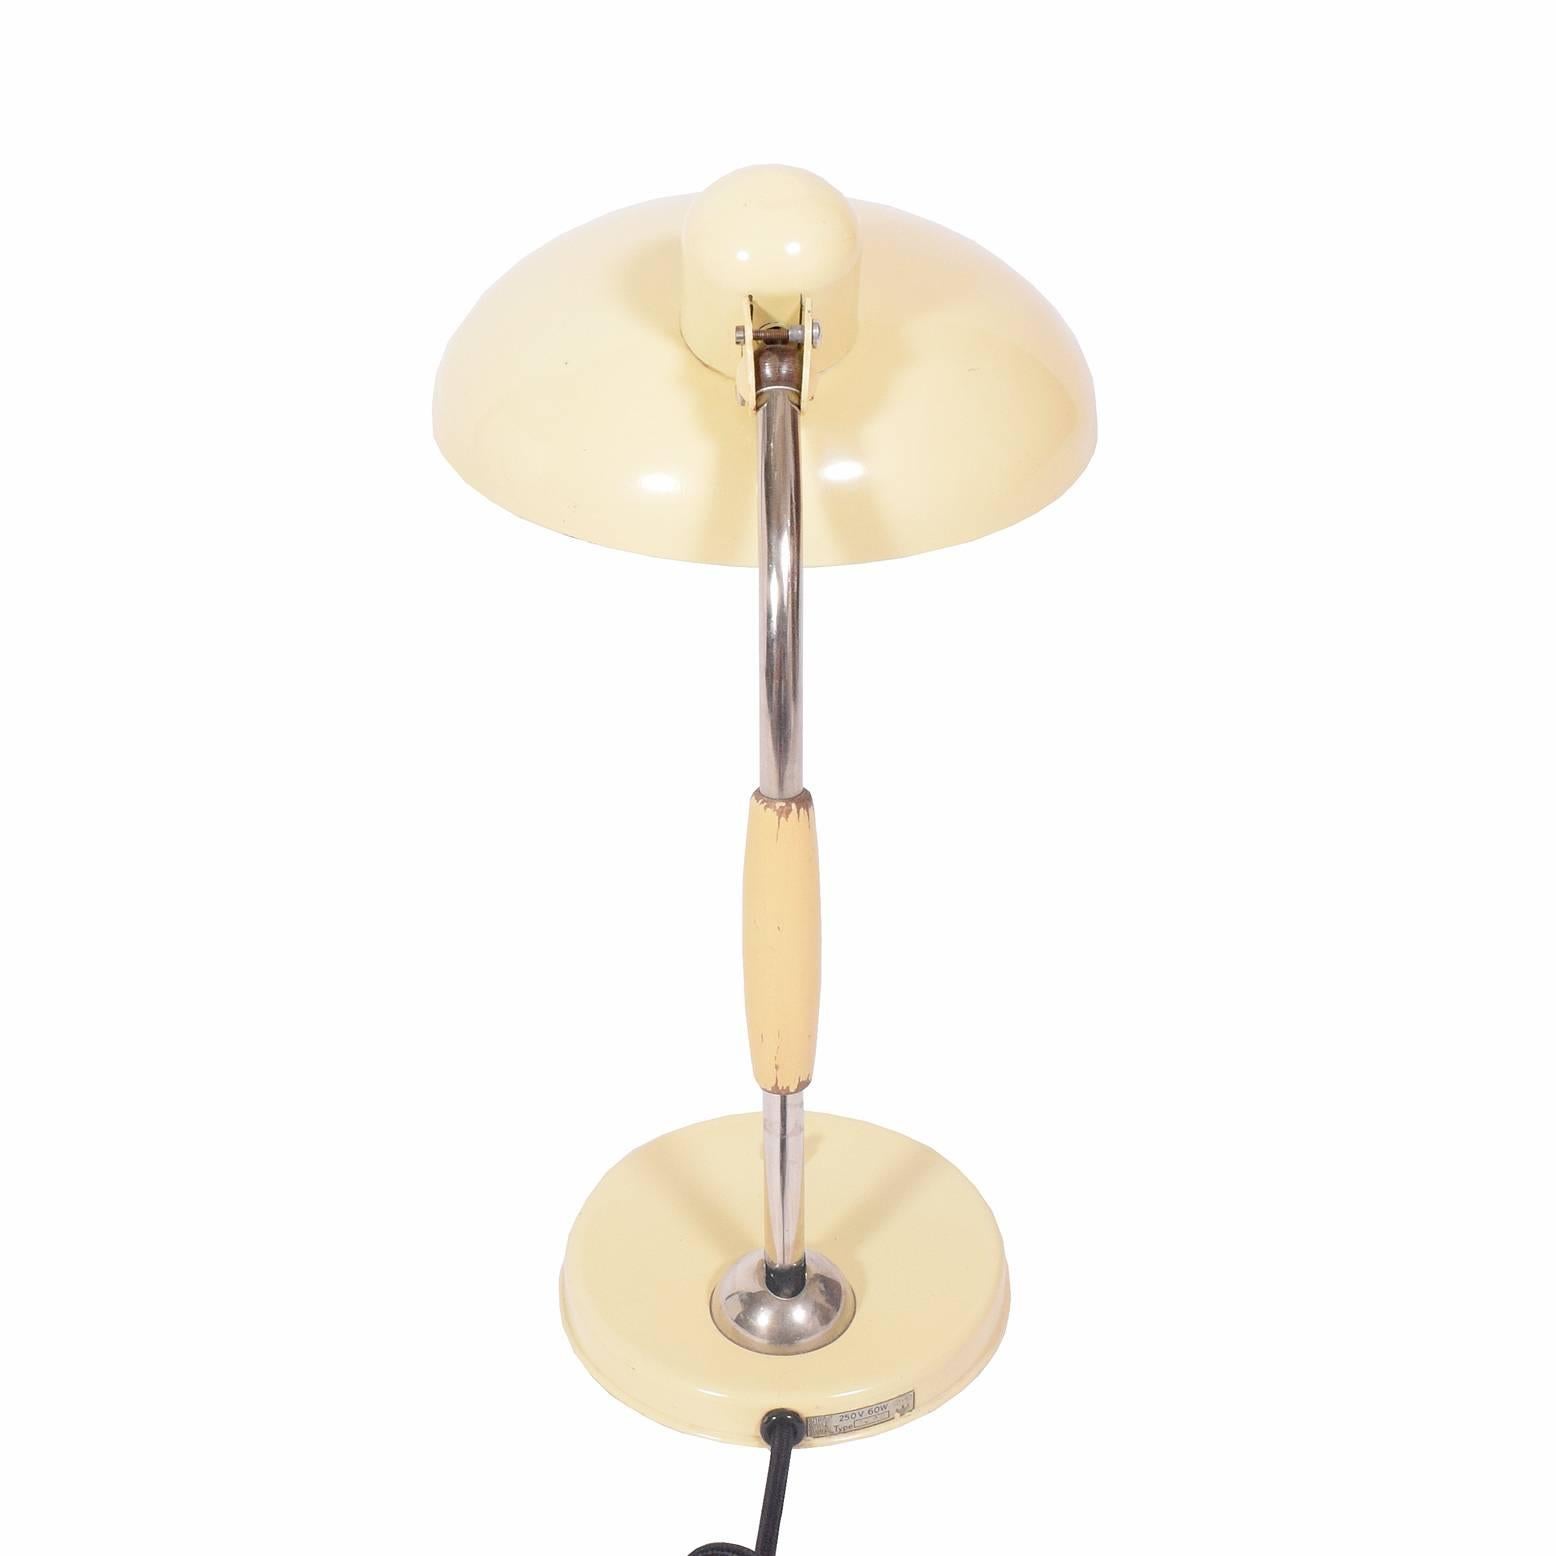 Bauhaus Art Deco Table Lamp Made by Kora Light, Austria